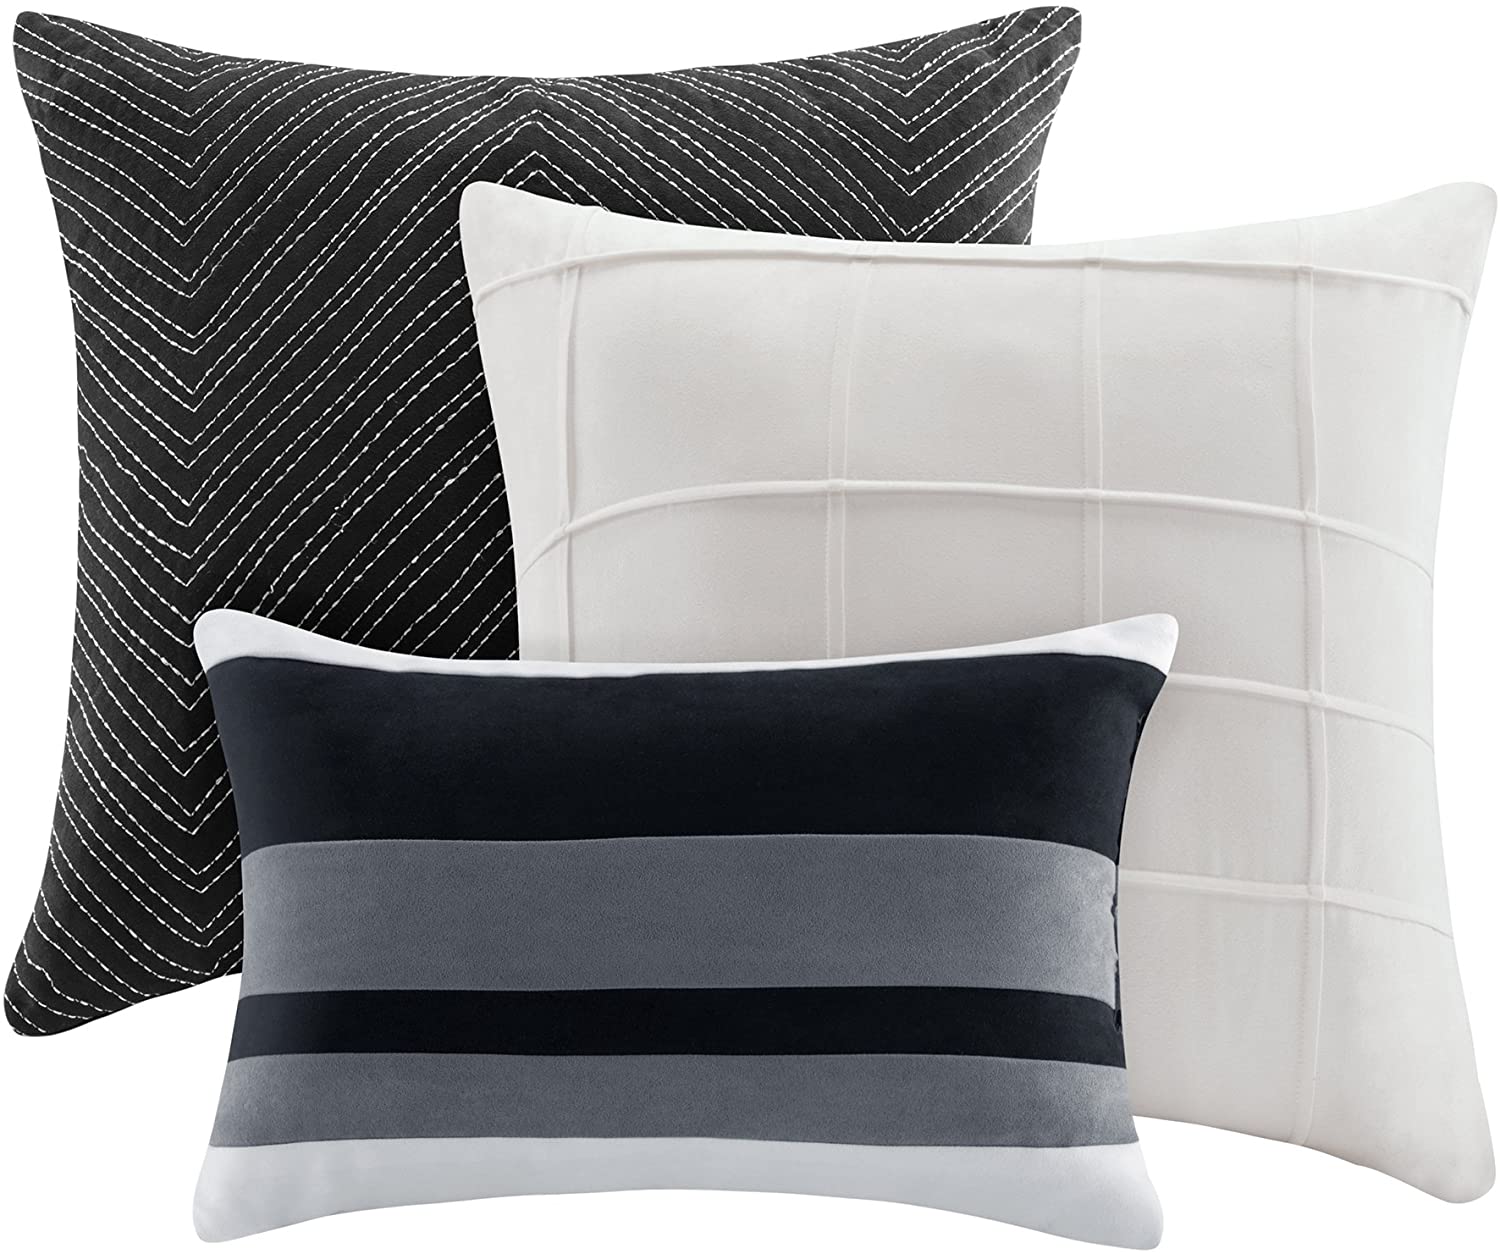 Bridgeport Grey 7-Piece Comforter Set Comforter Sets By Olliix/JLA HOME (E & E Co., Ltd)